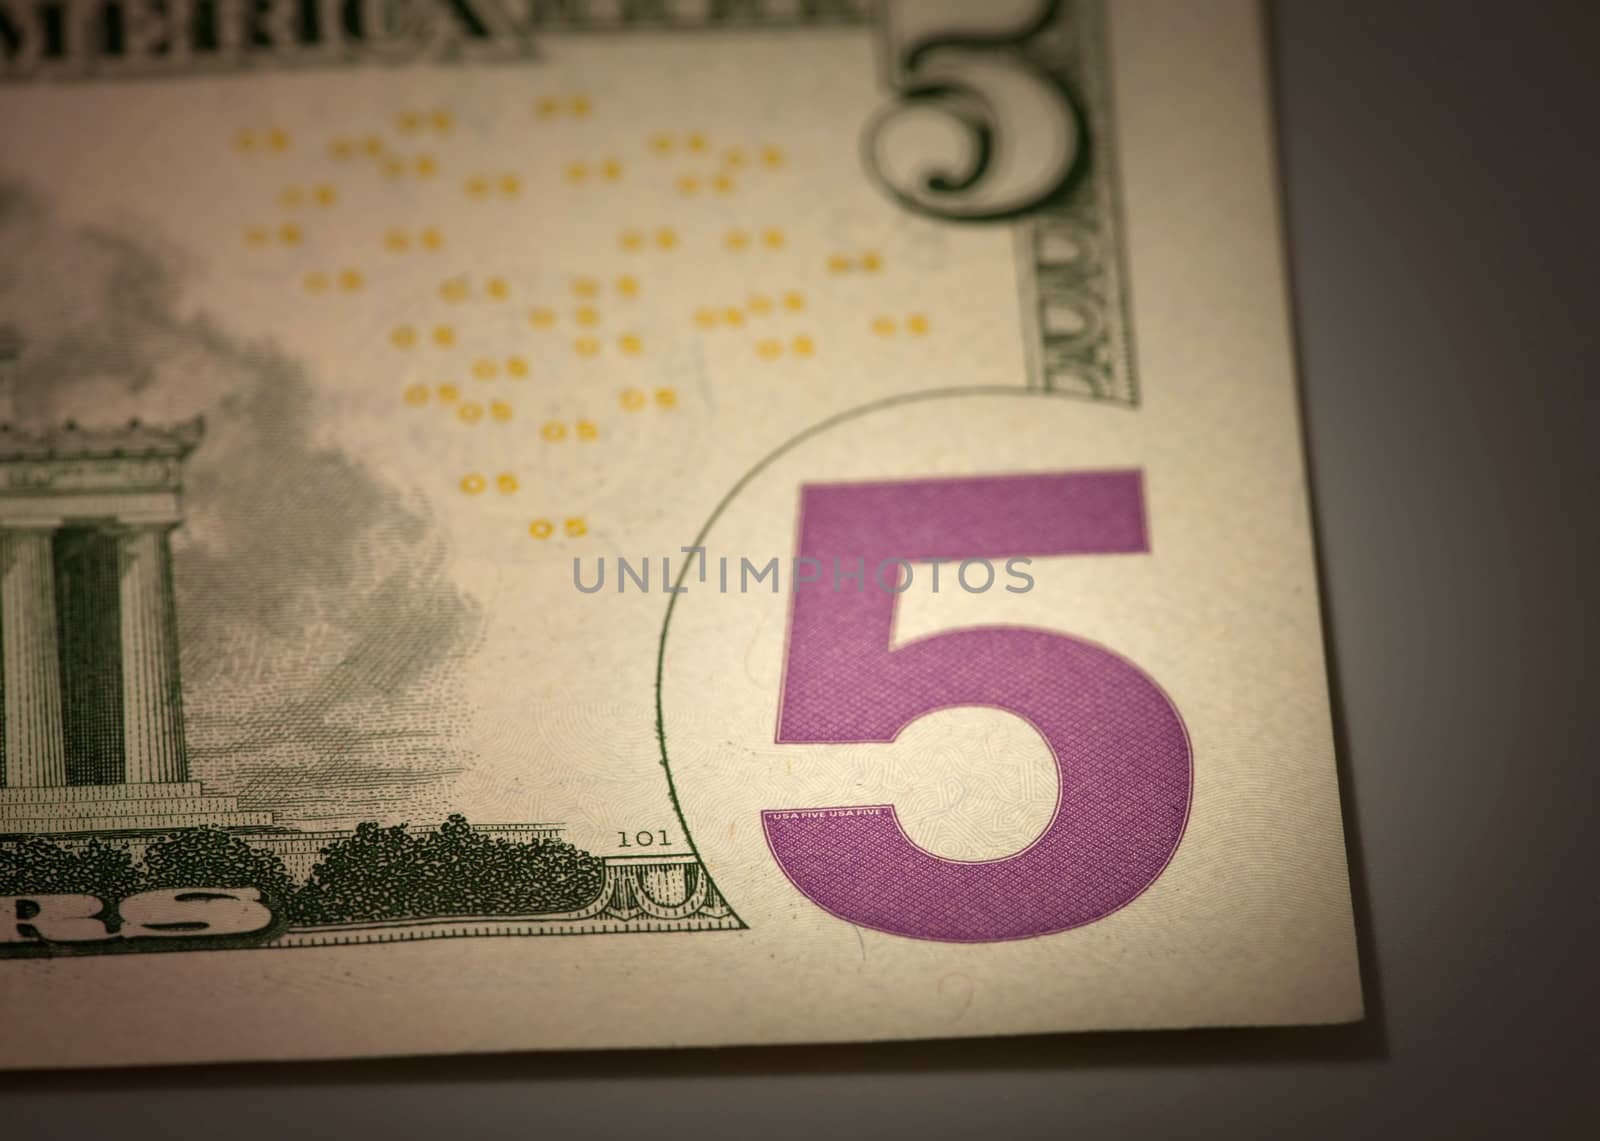 number 5 on the dollar bill macro shot